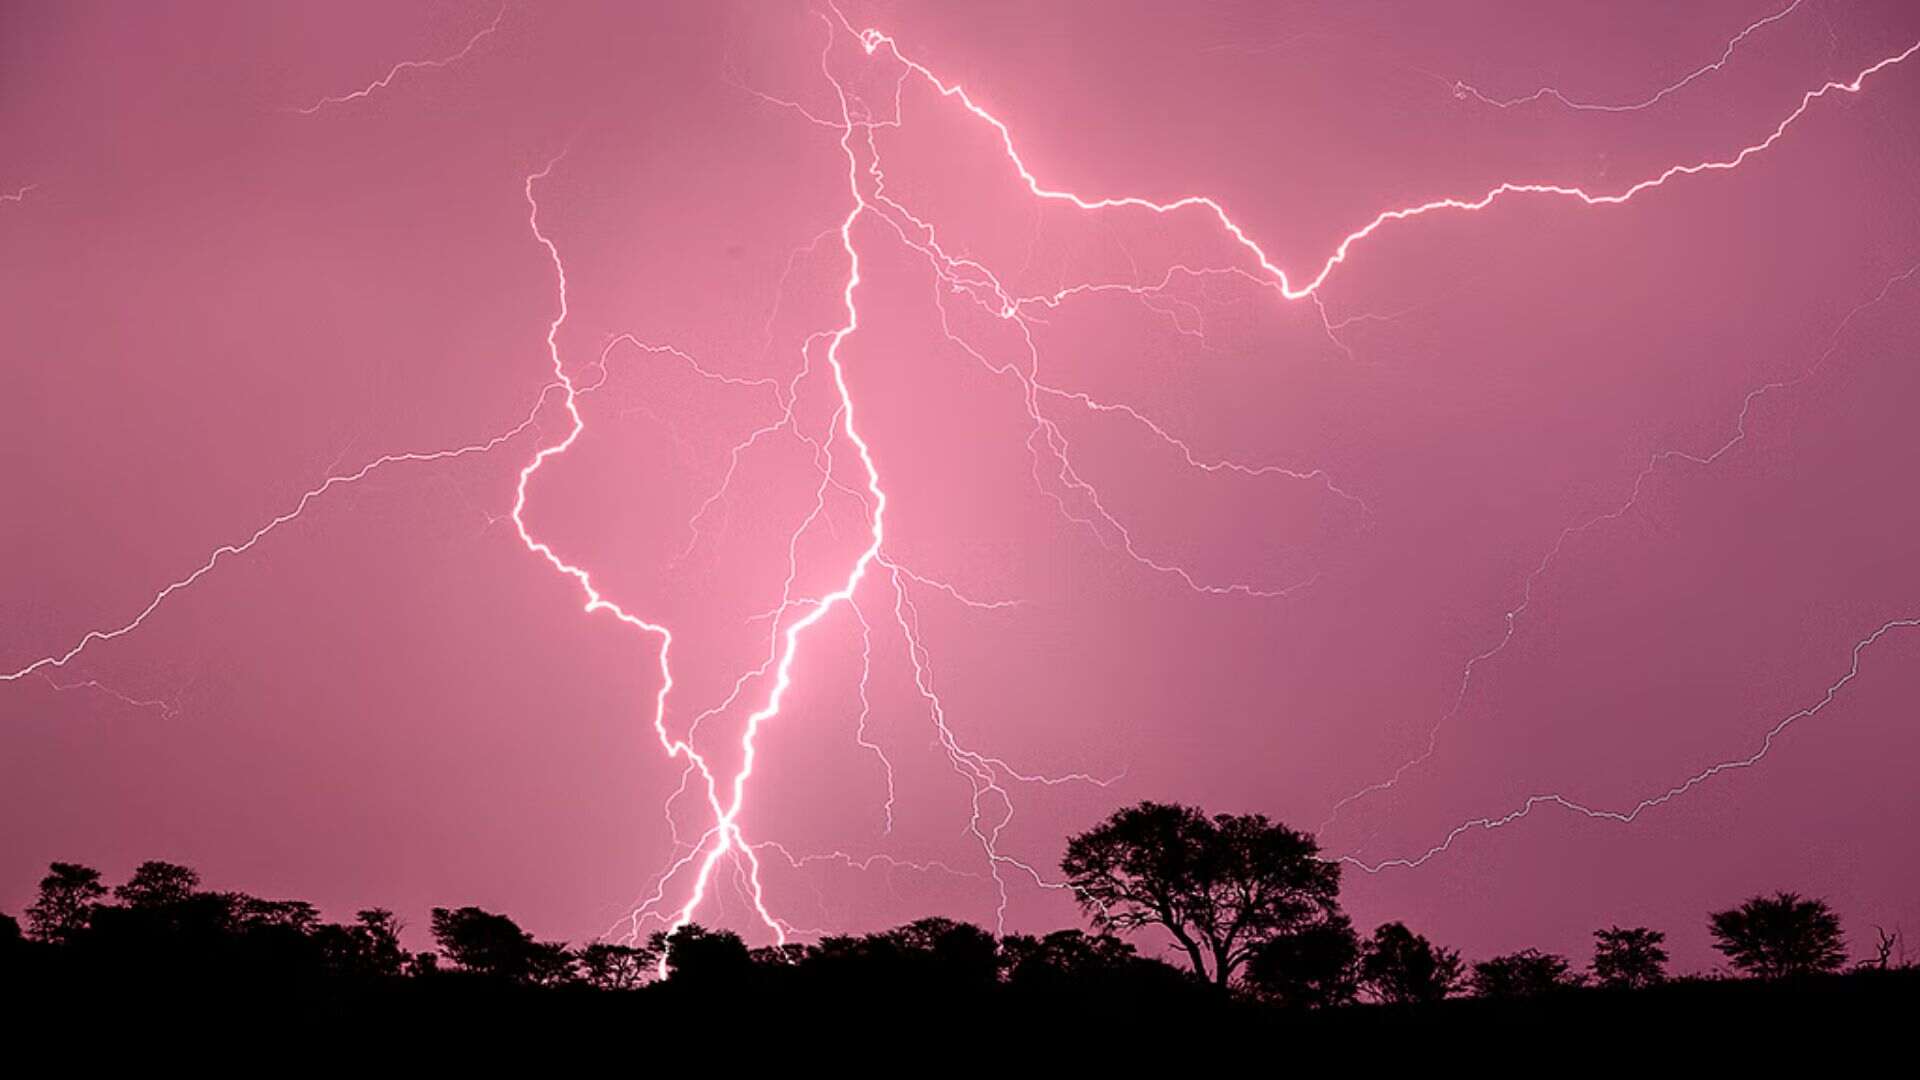 Bihar: 12 People Died Due To Lightning Strike, Govt Announces Compensation